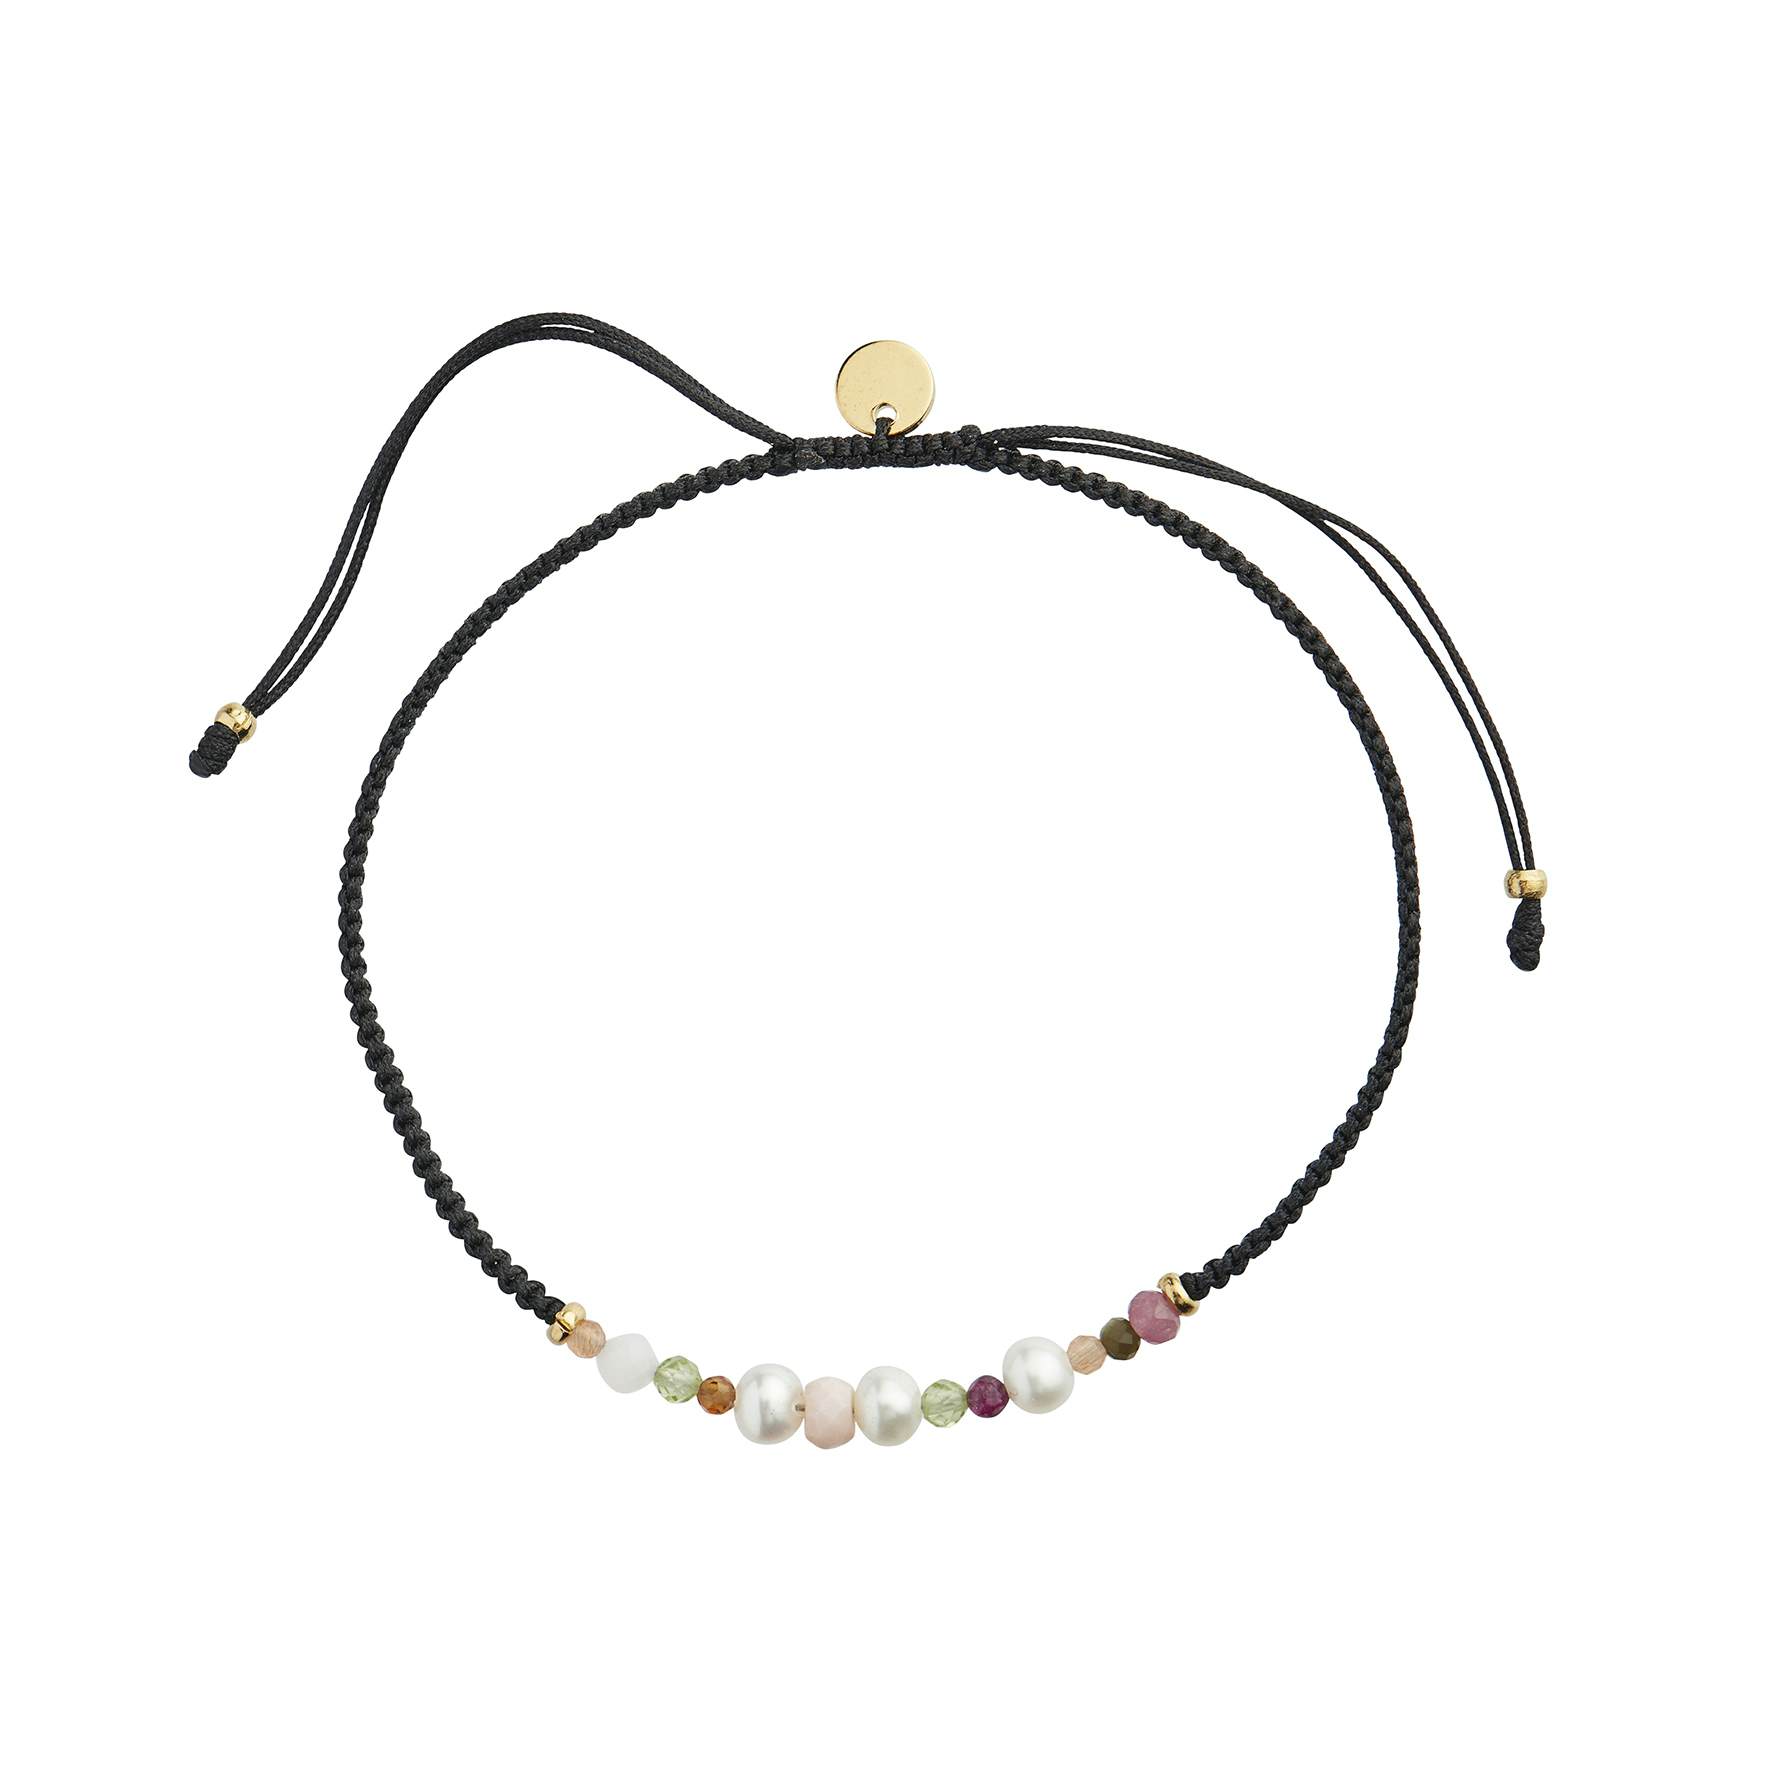 Candy Bracelet - White Forest Mix & Black Ribbon fra STINE A Jewelry i Nylon